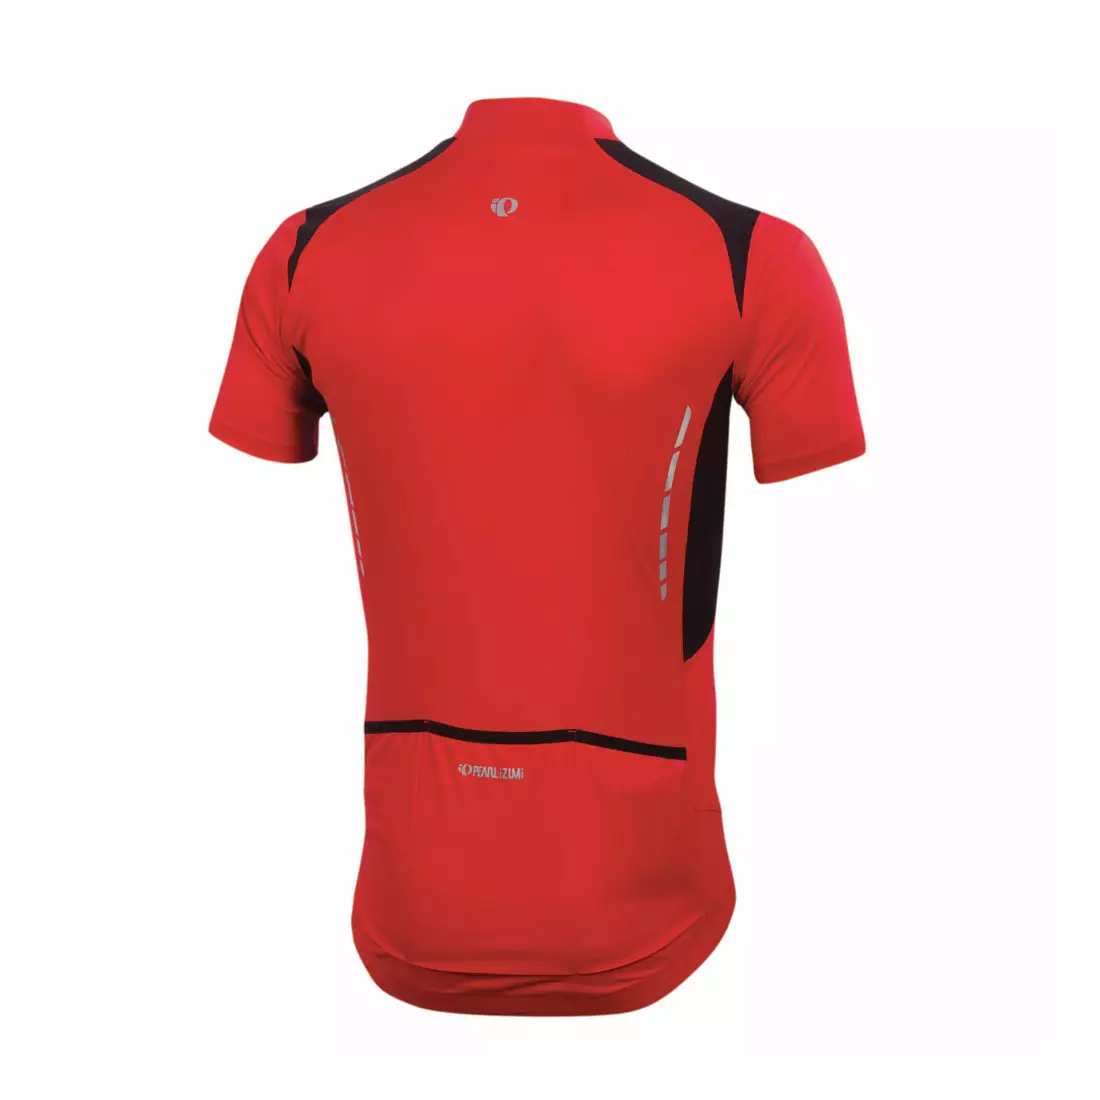 PEARL IZUMI - ELITE 11121105 - cycling jersey